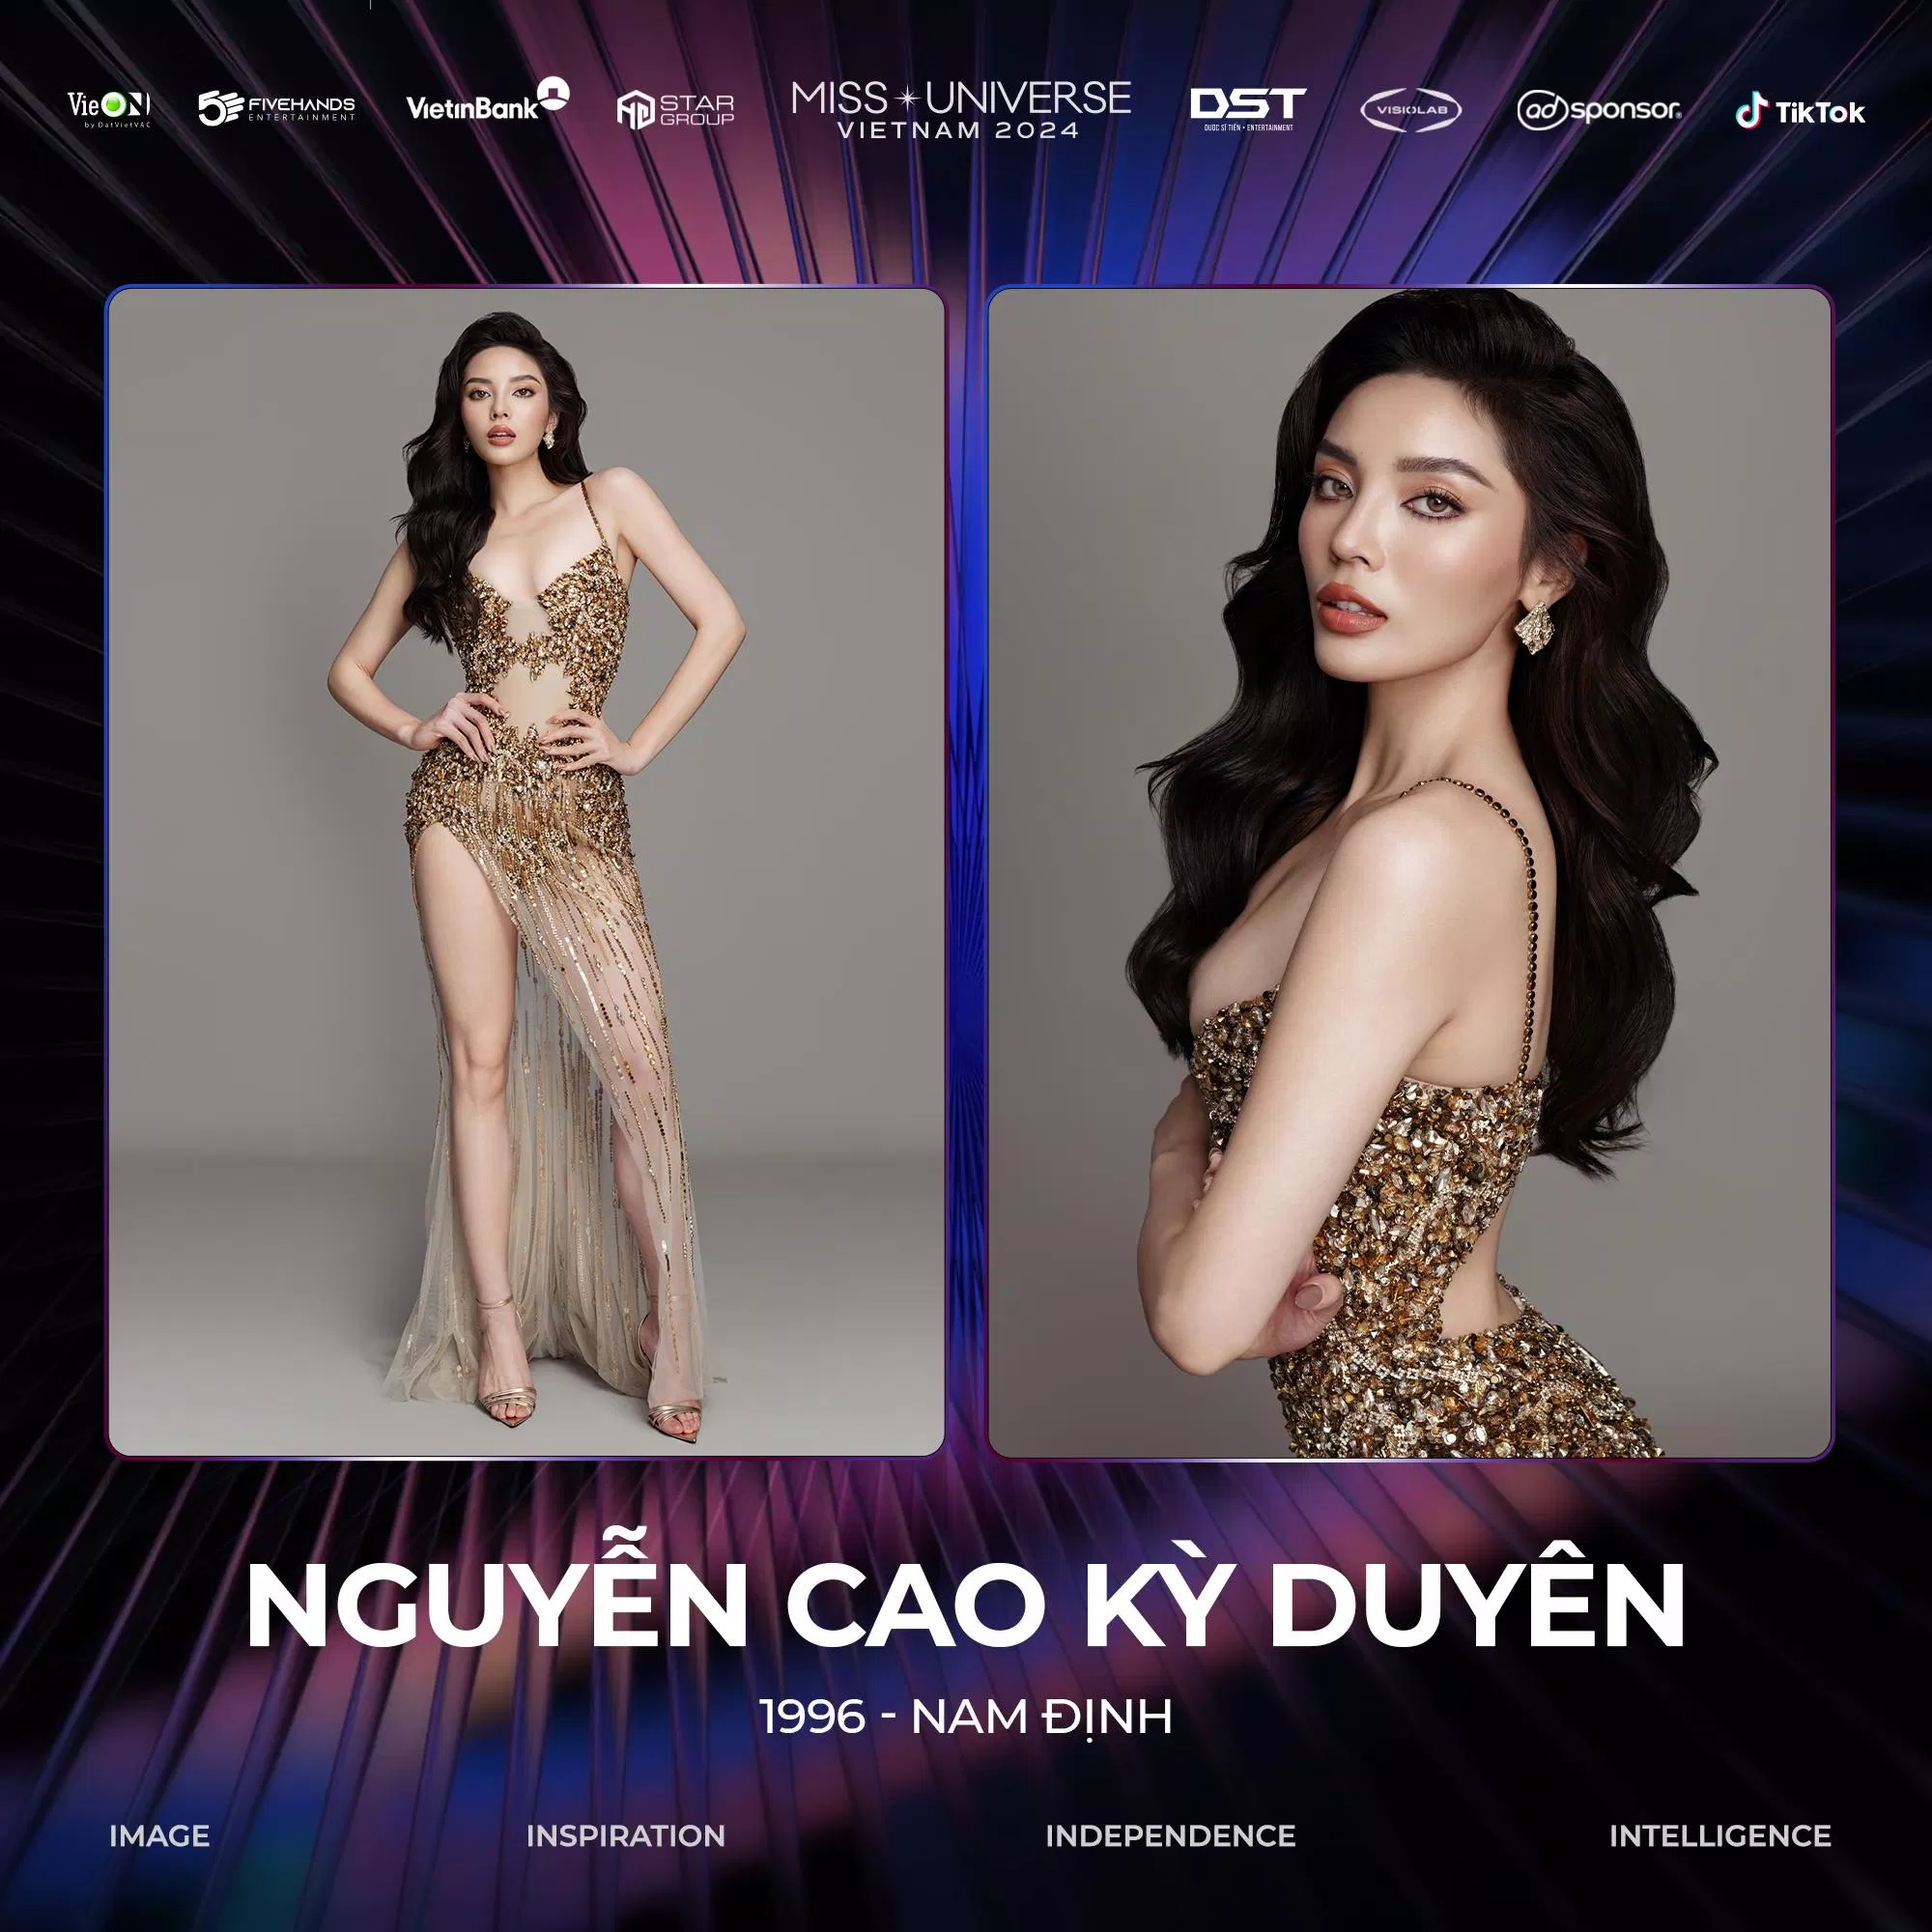 Nguồn: Fanpage Miss Universe Vietnam